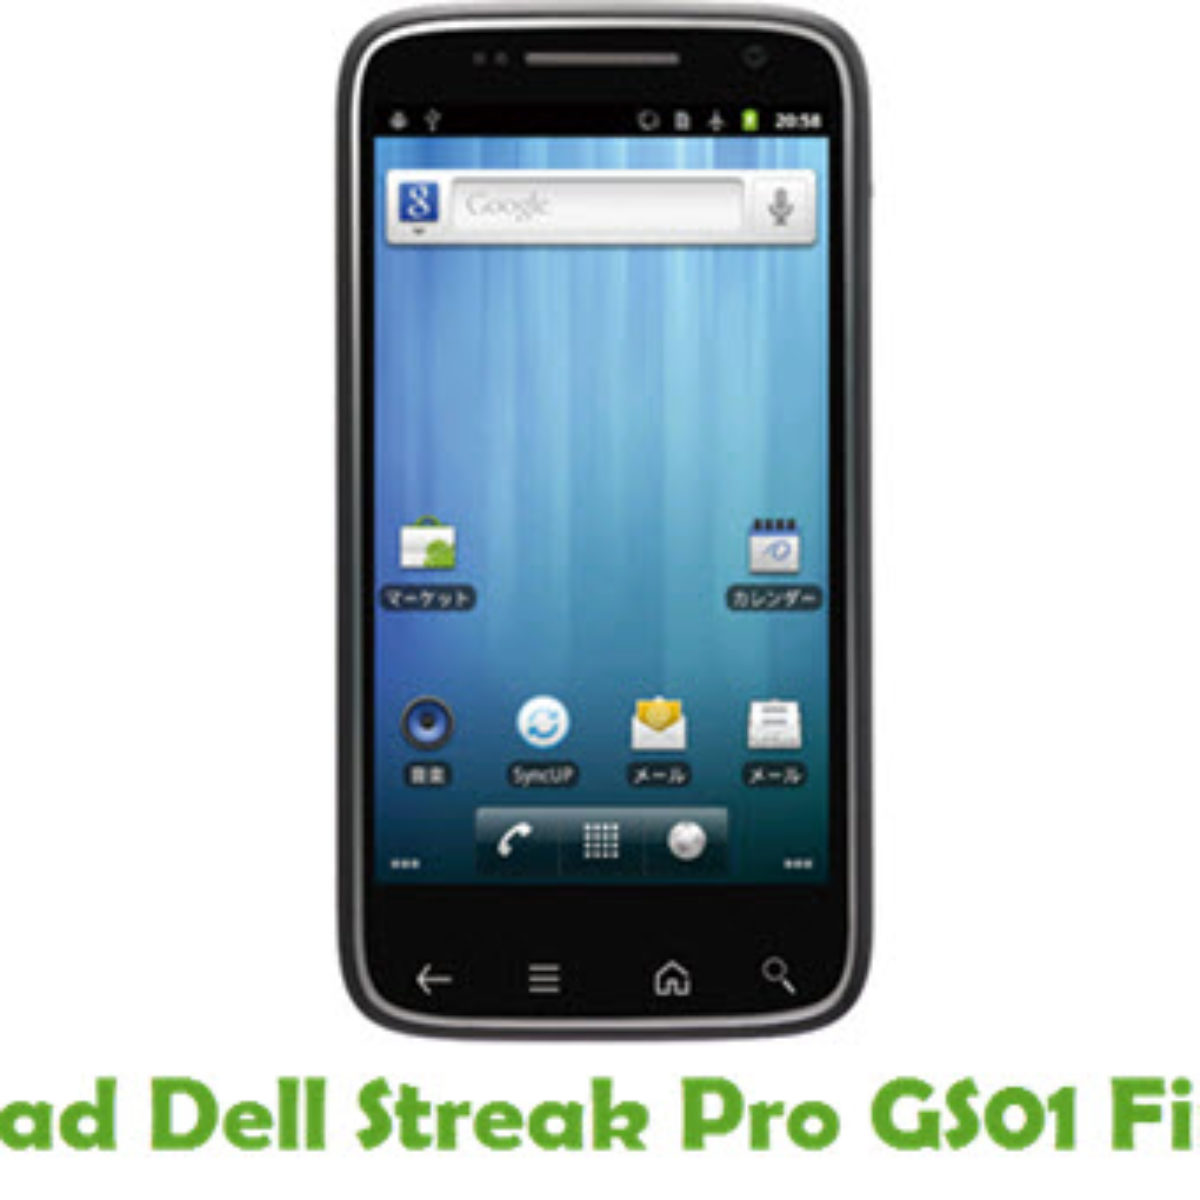 Download Dell Streak Pro Gs01 Firmware Stock Rom Files